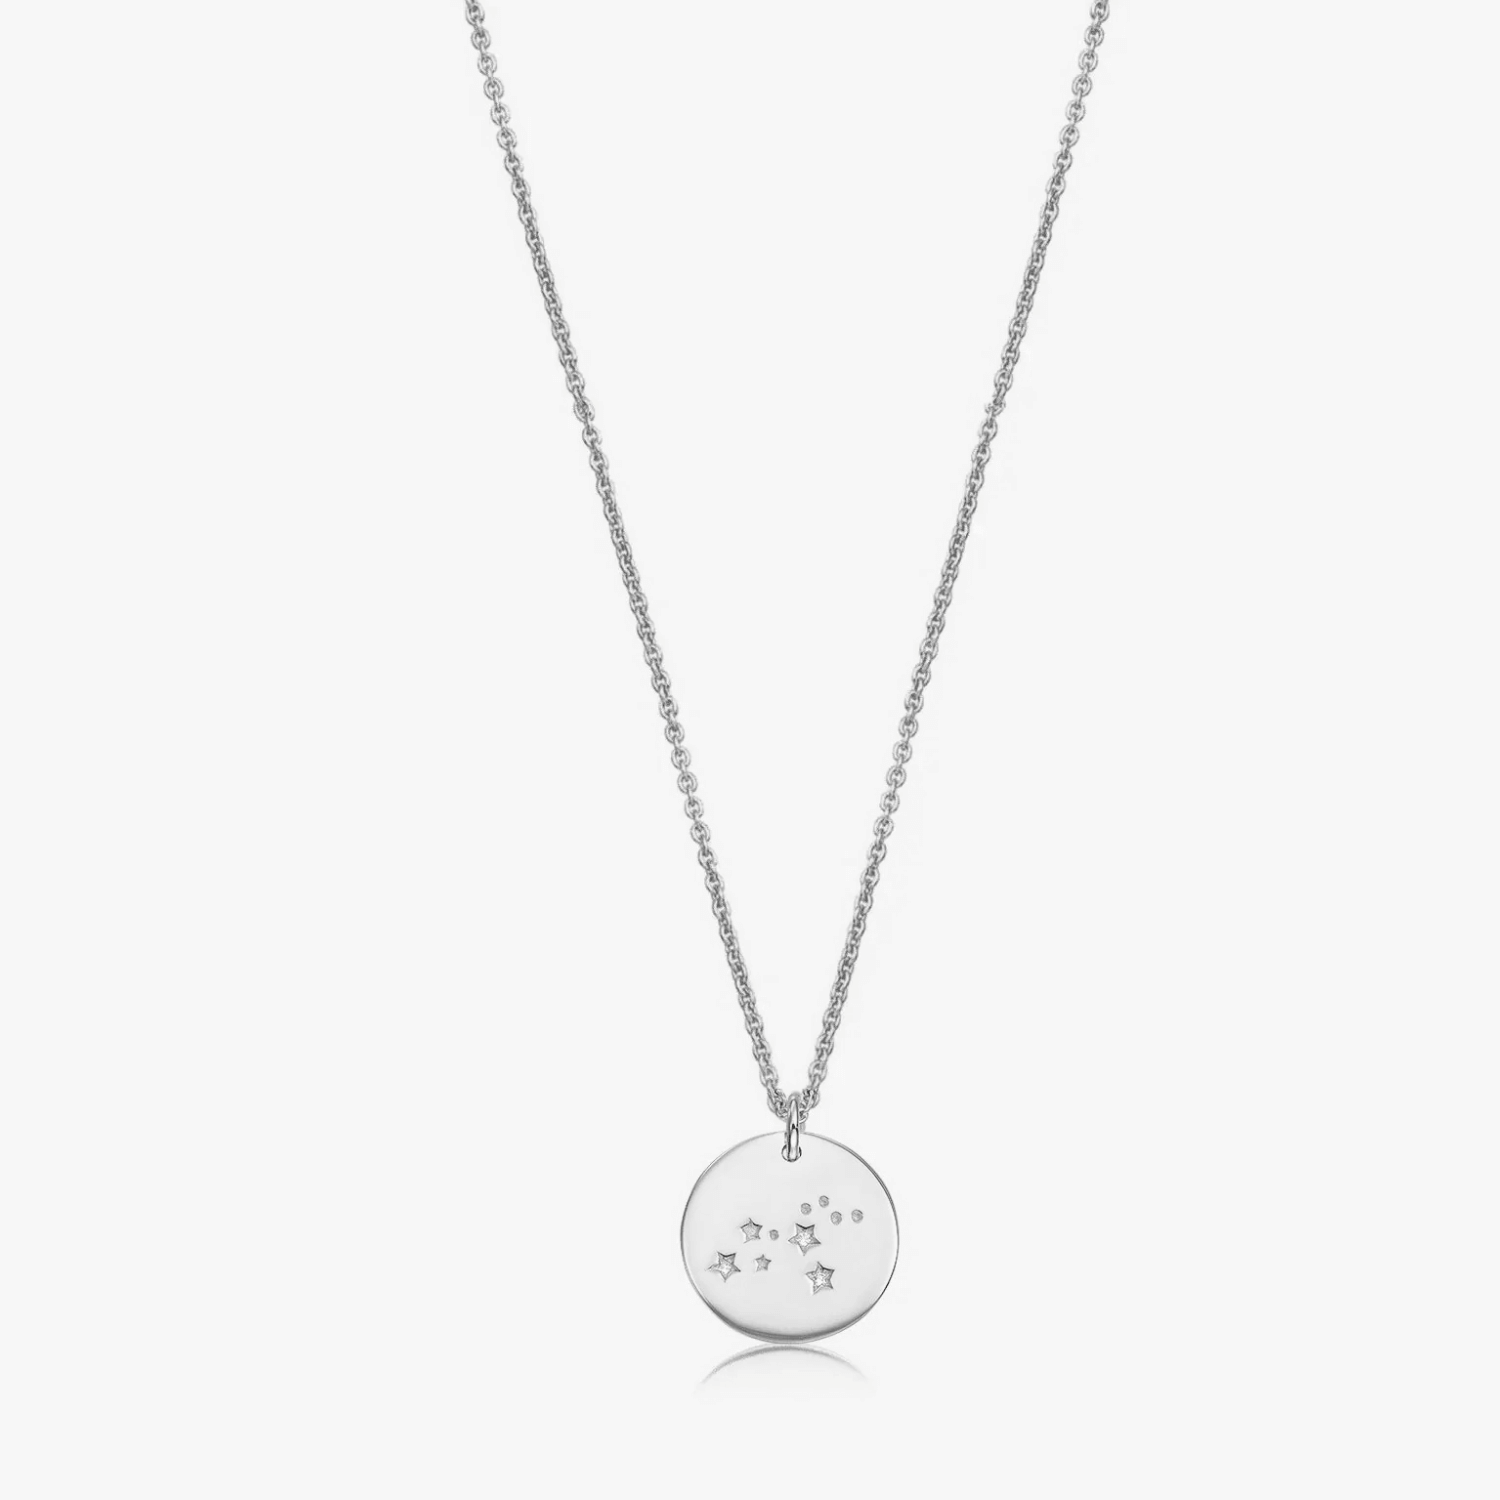 Silver Zodiac - Leo necklace